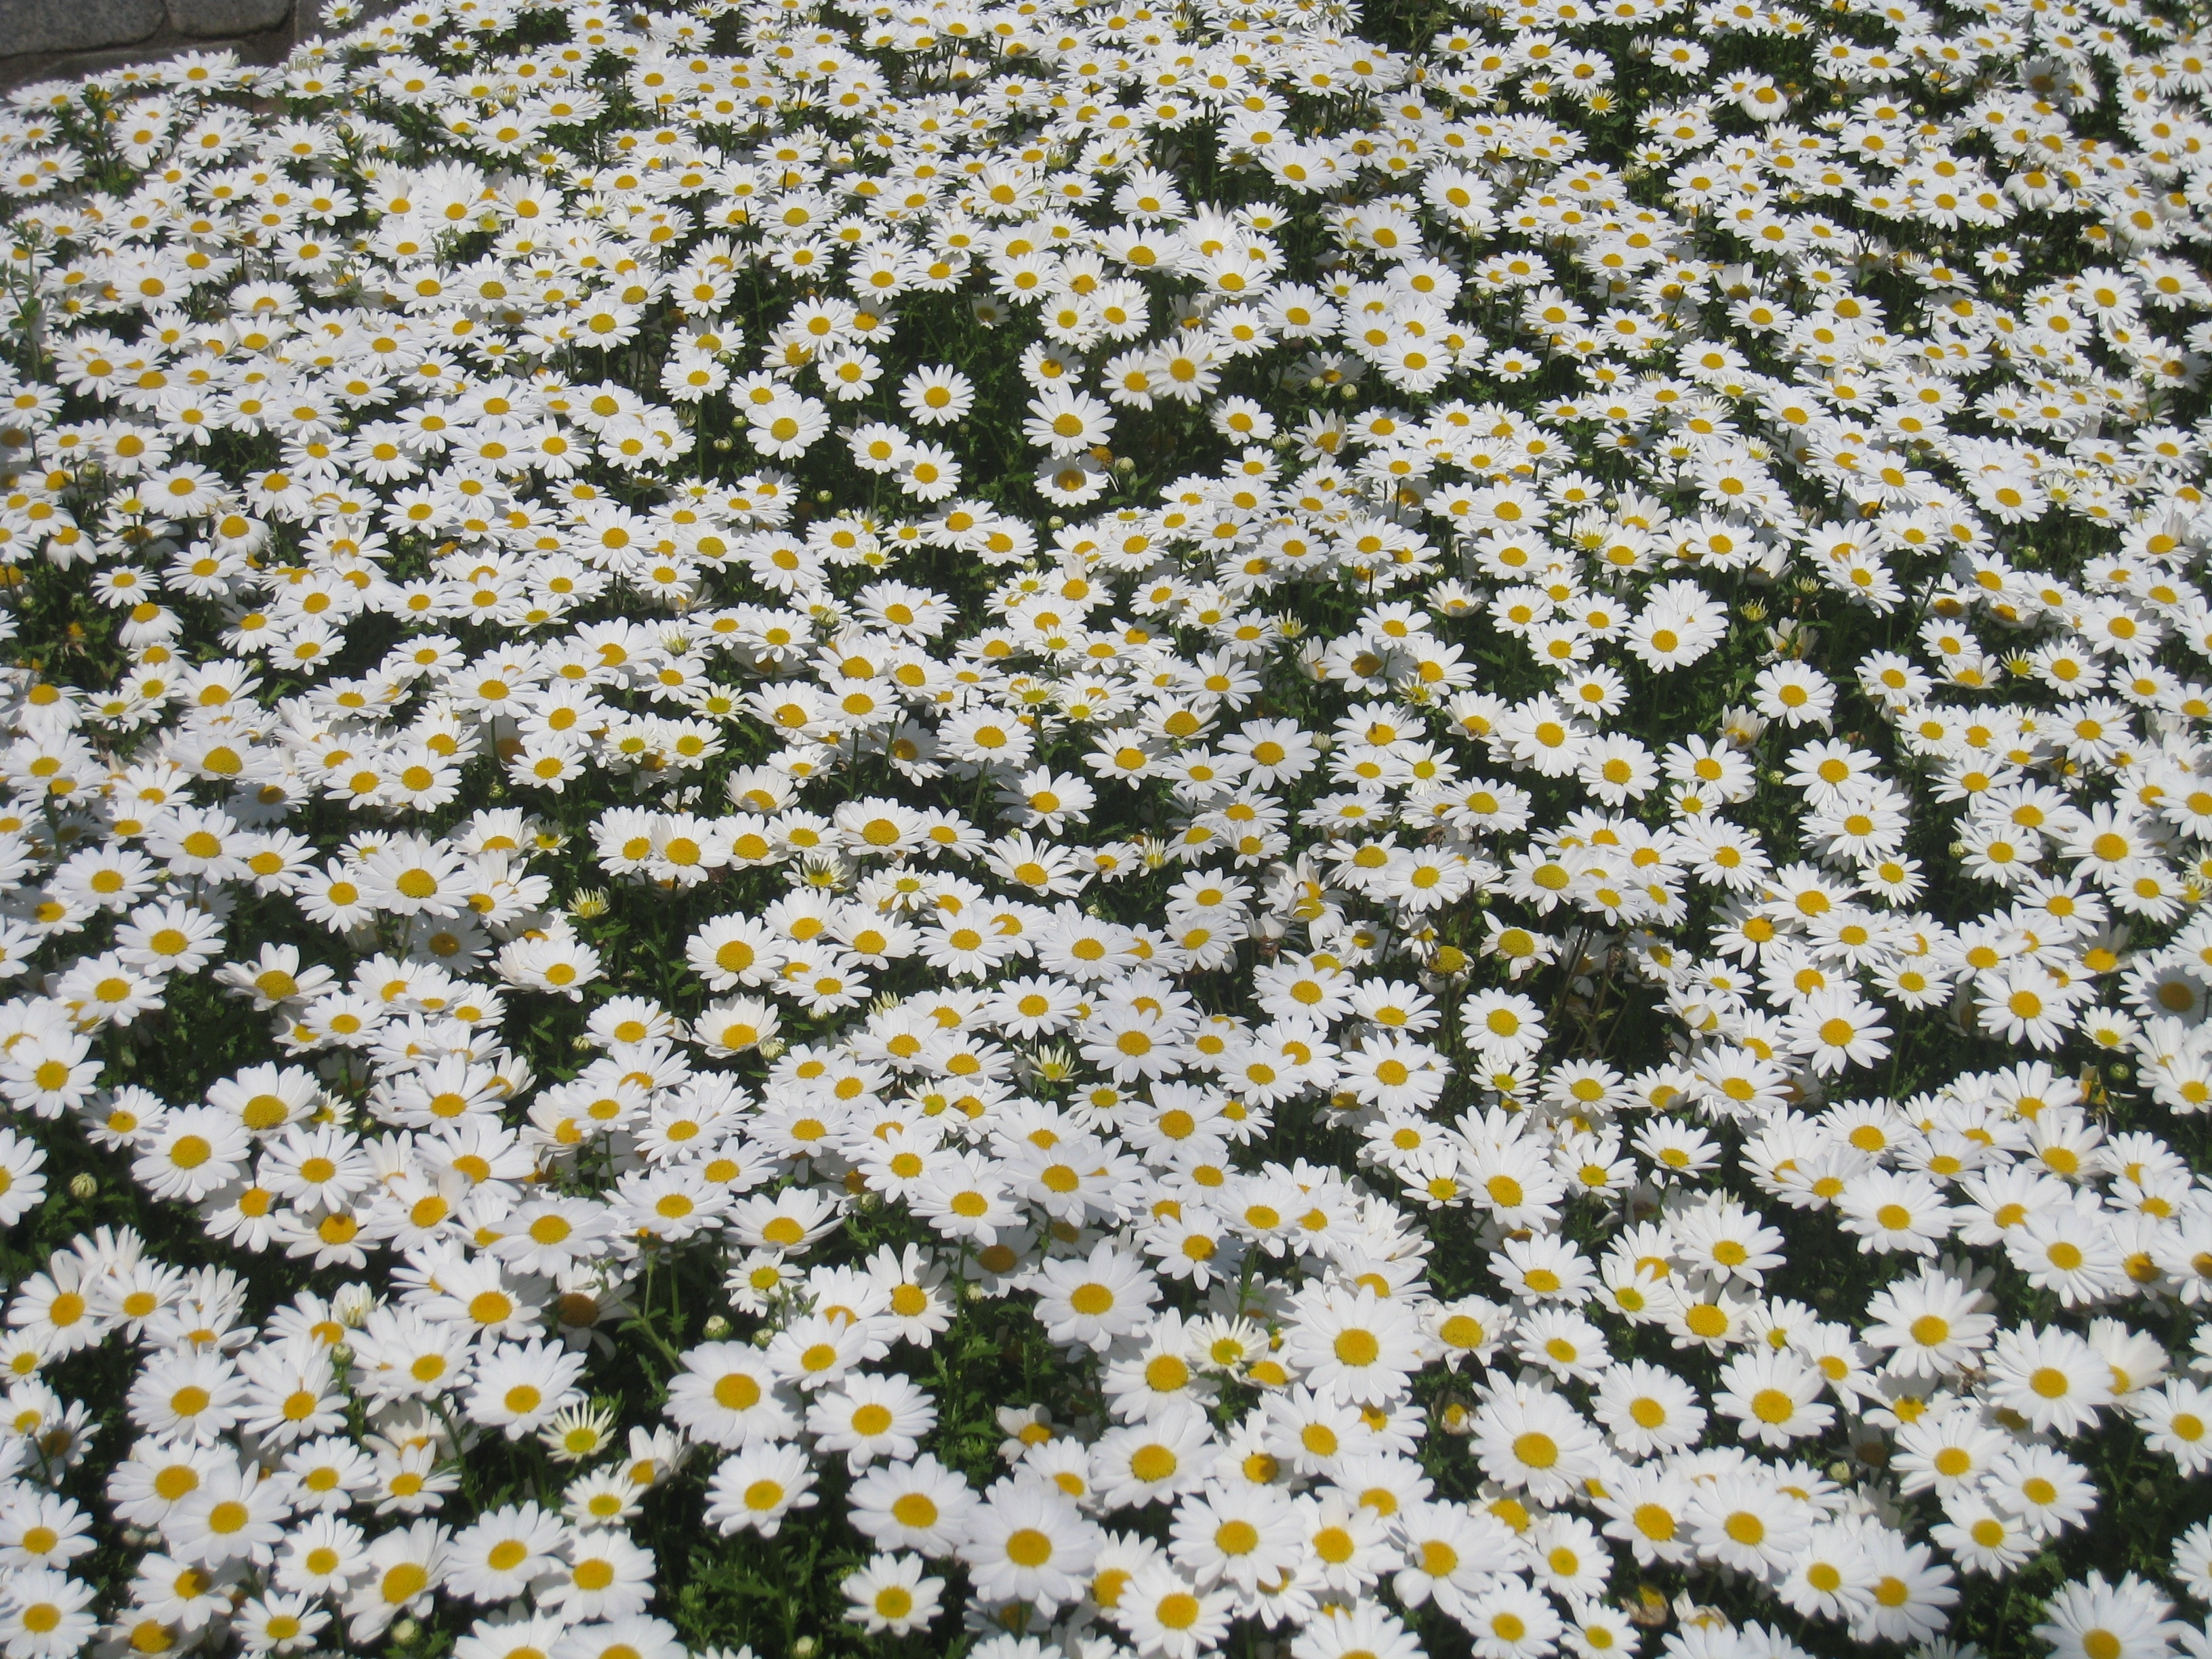 white daisy flowers